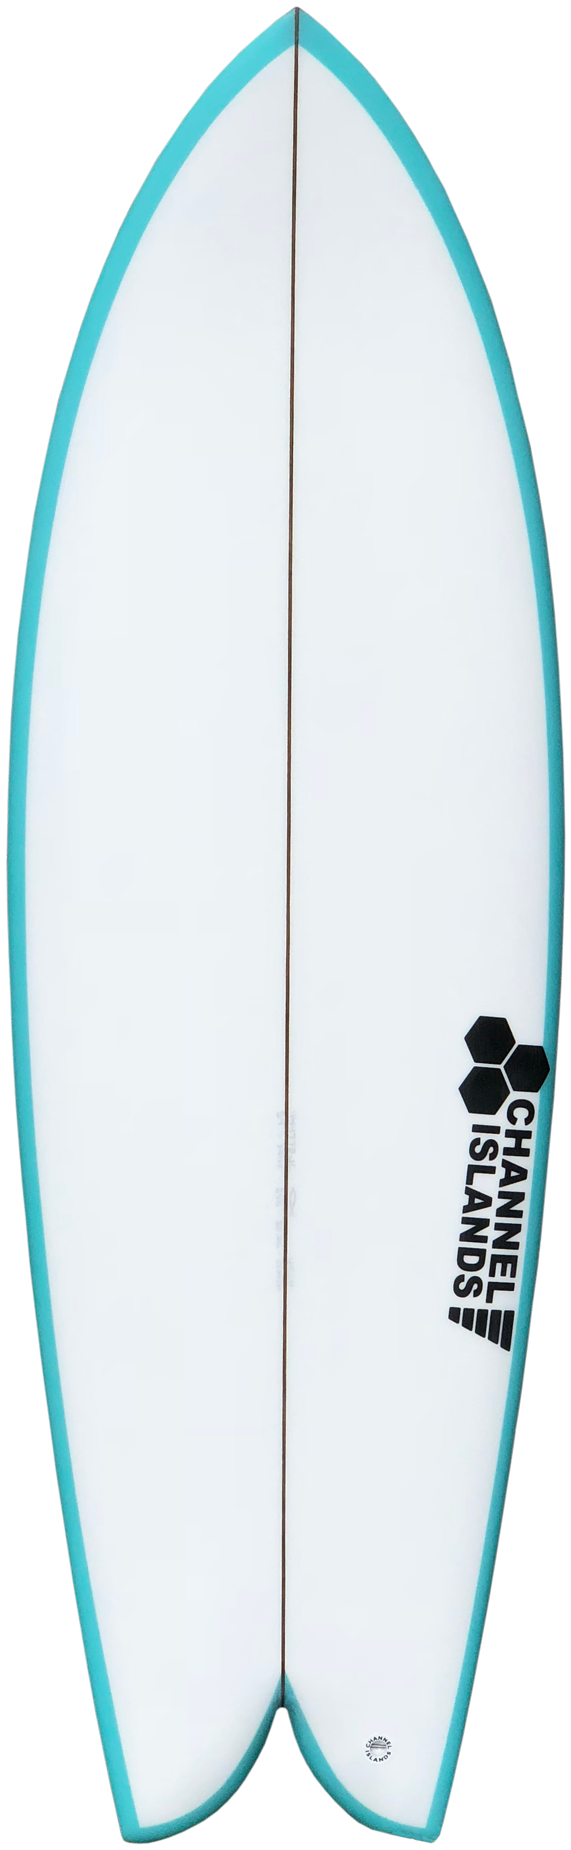 cisurfboards.com